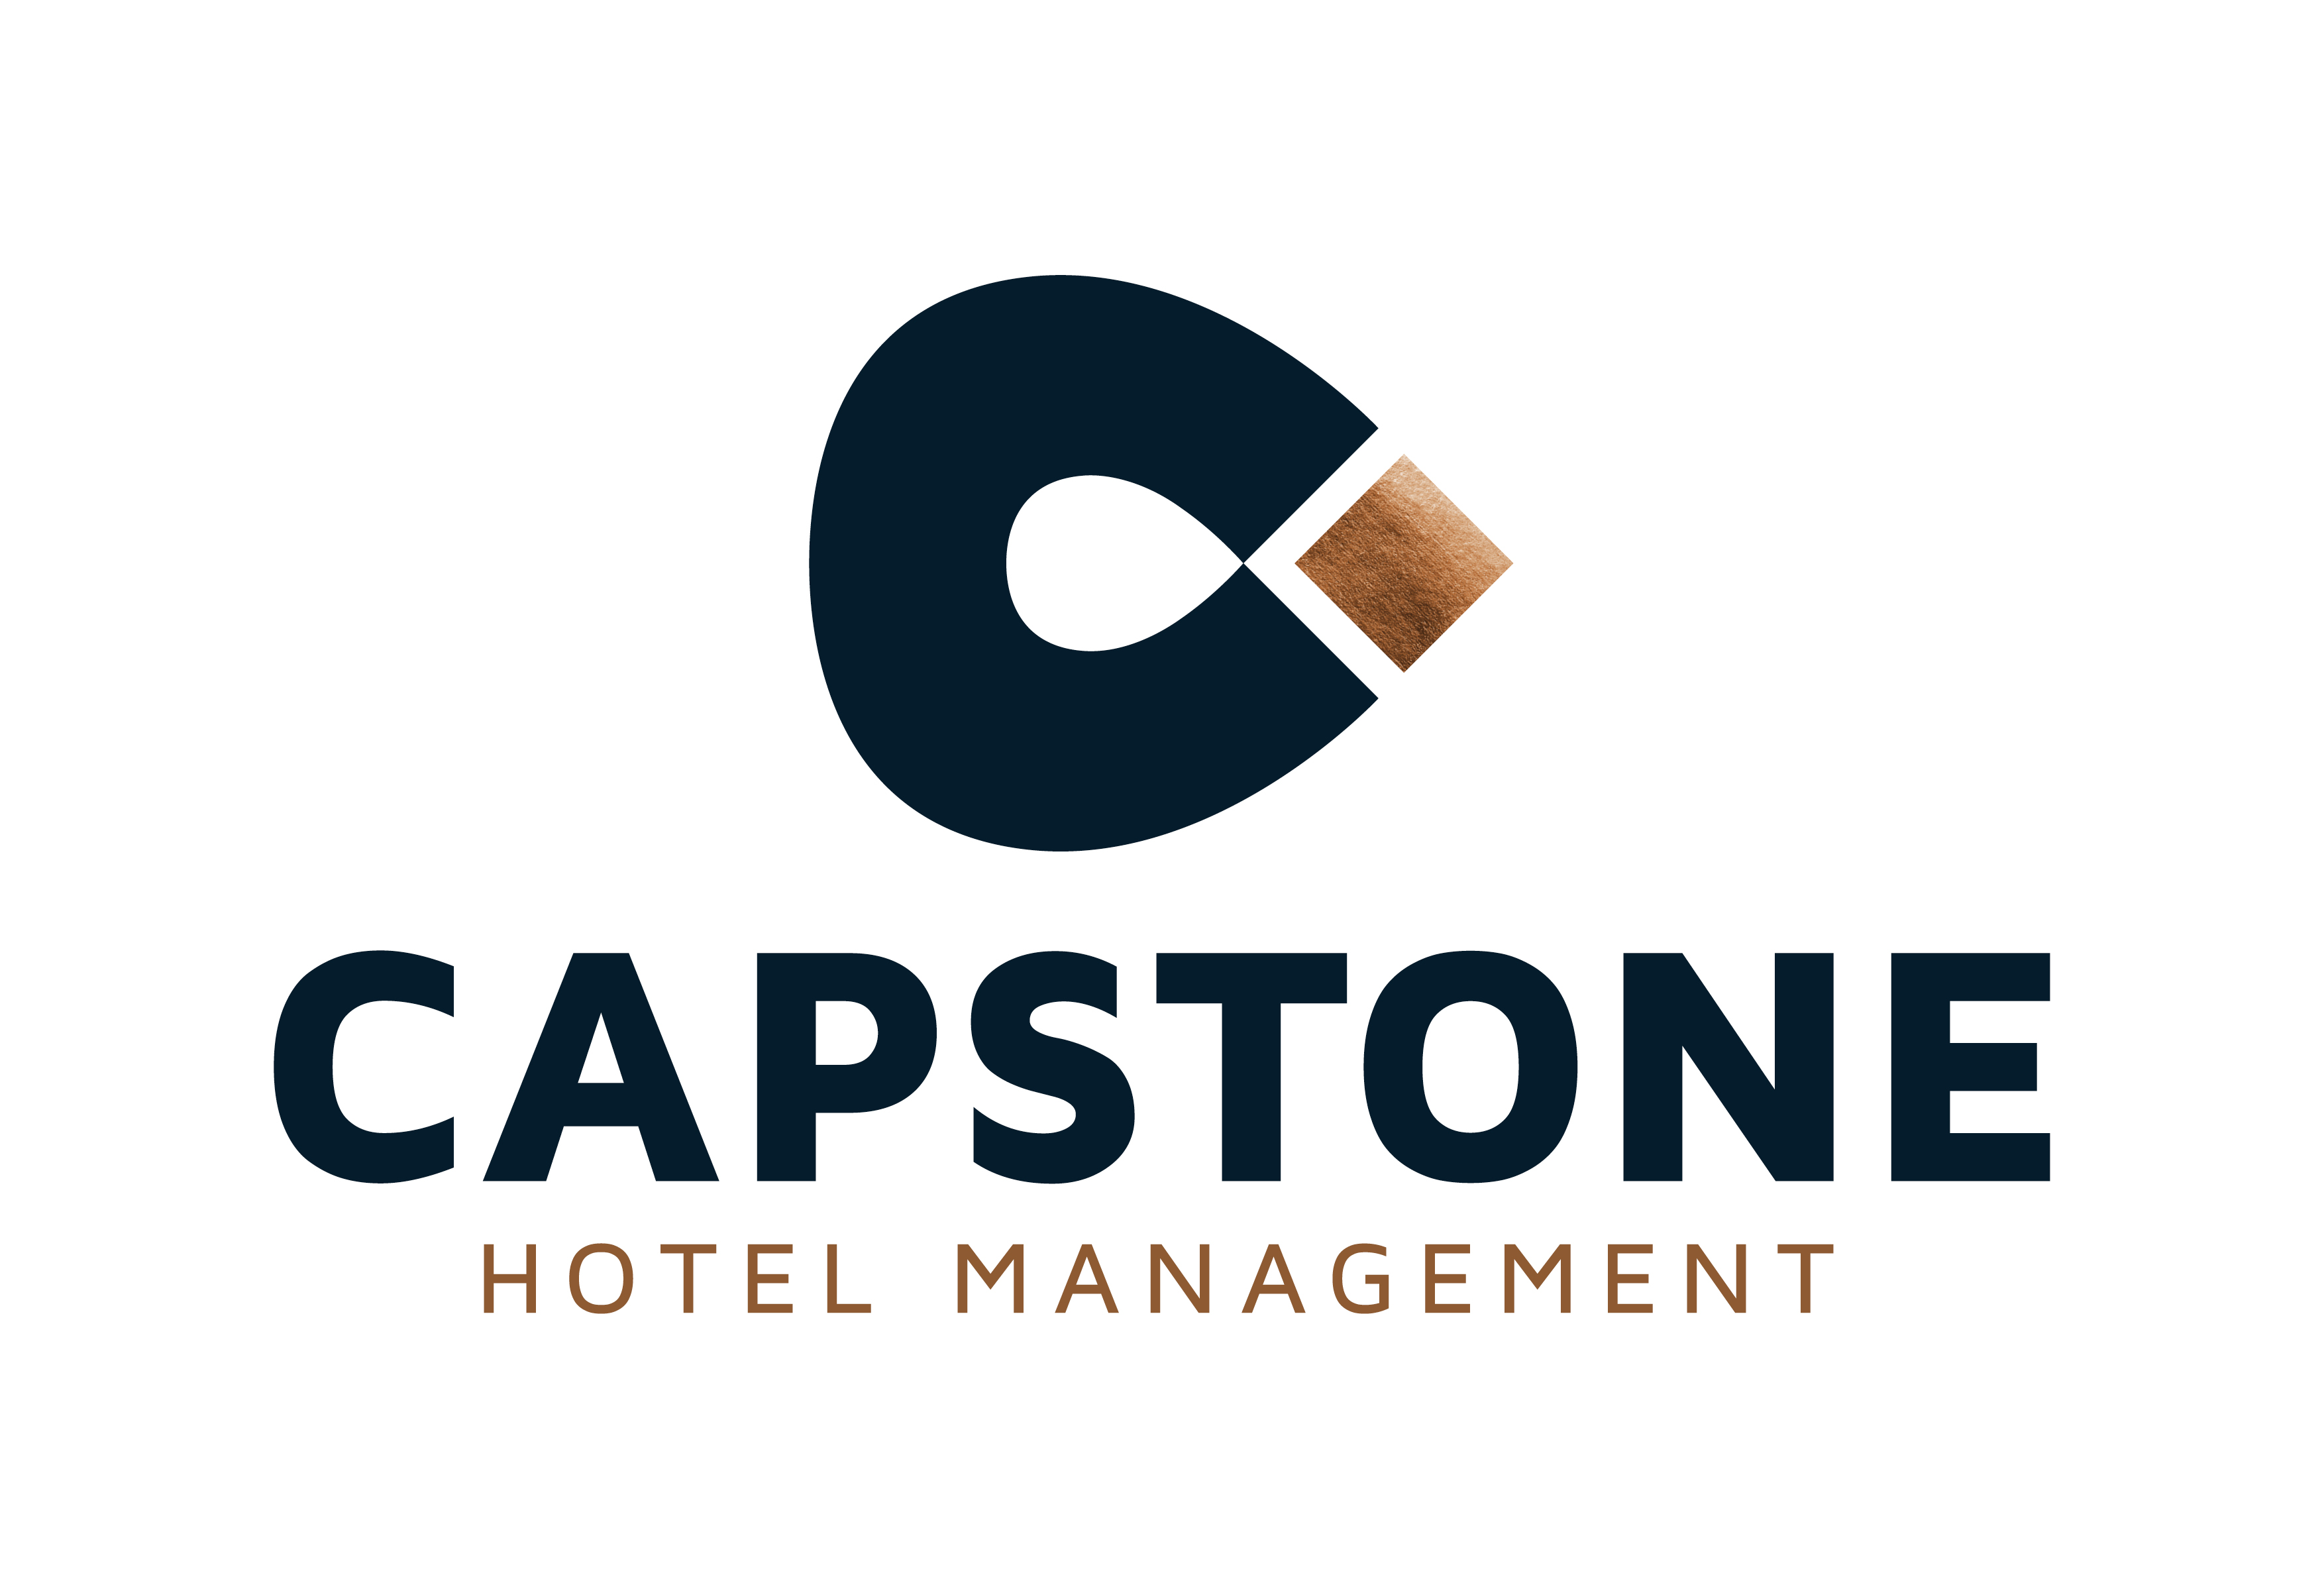 
Capstone Hotel Management